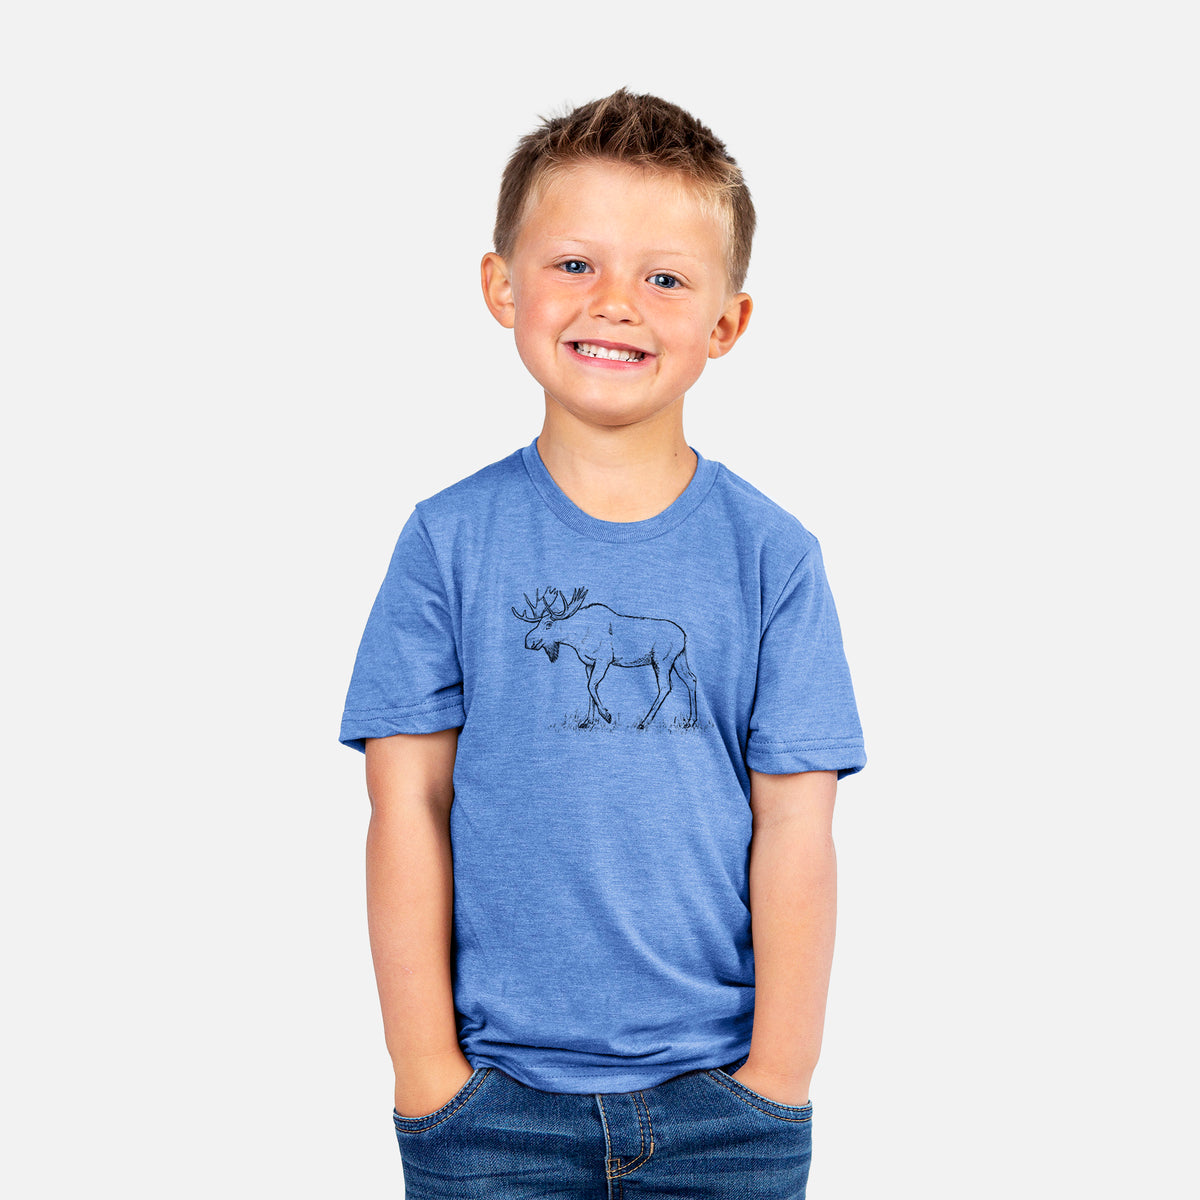 Bull Moose - Alces alces - Kids Shirt